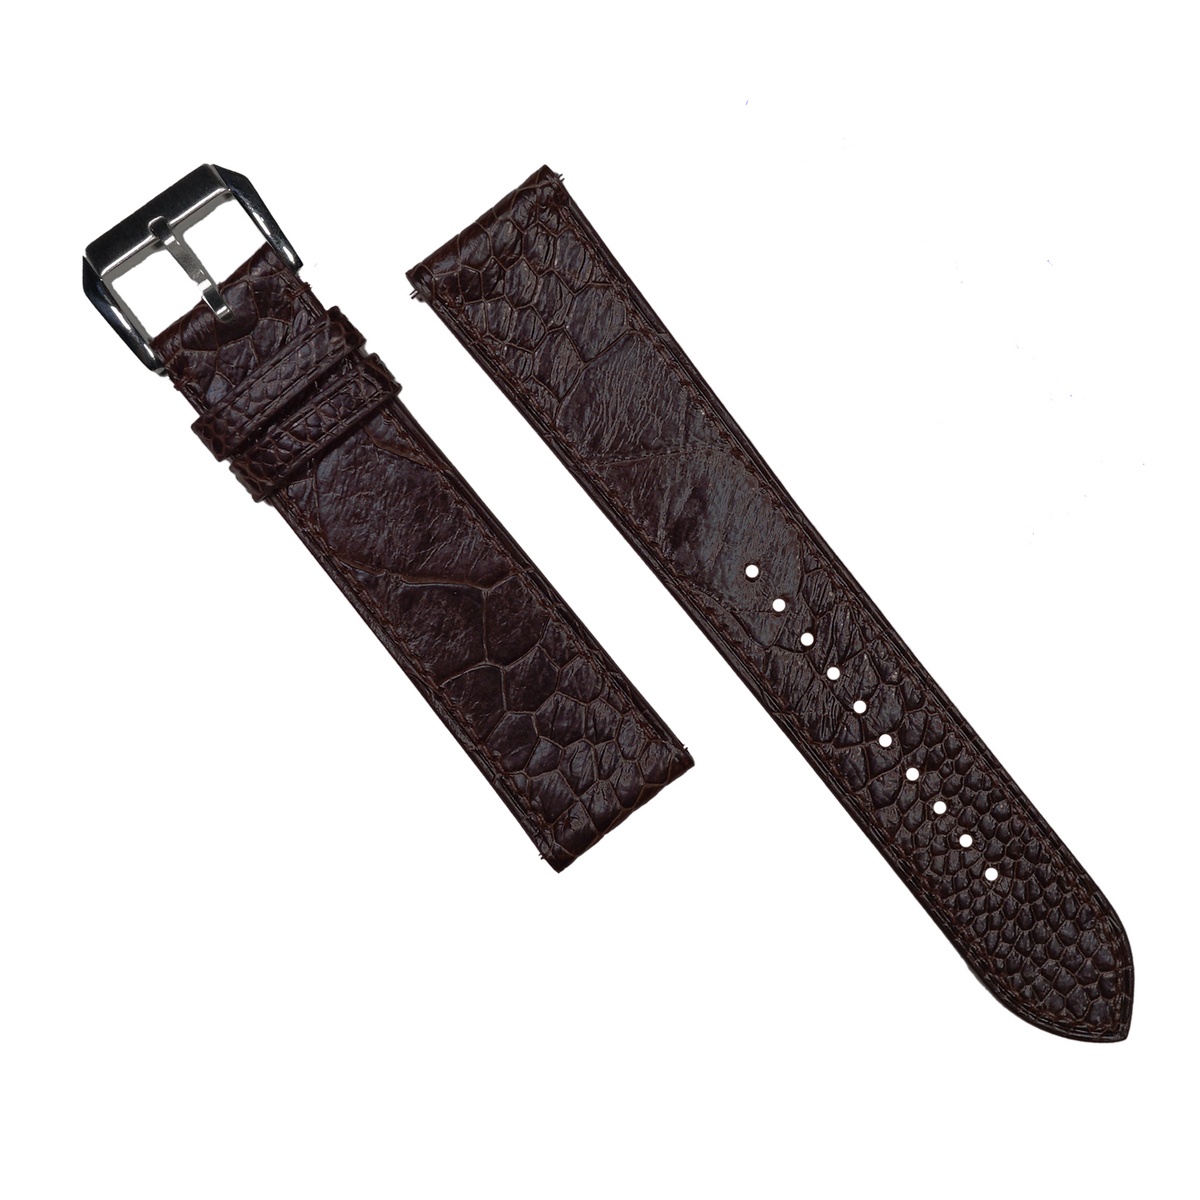 Ostrich Leather Watch Strap in Brown - Nomad Watch Works SG